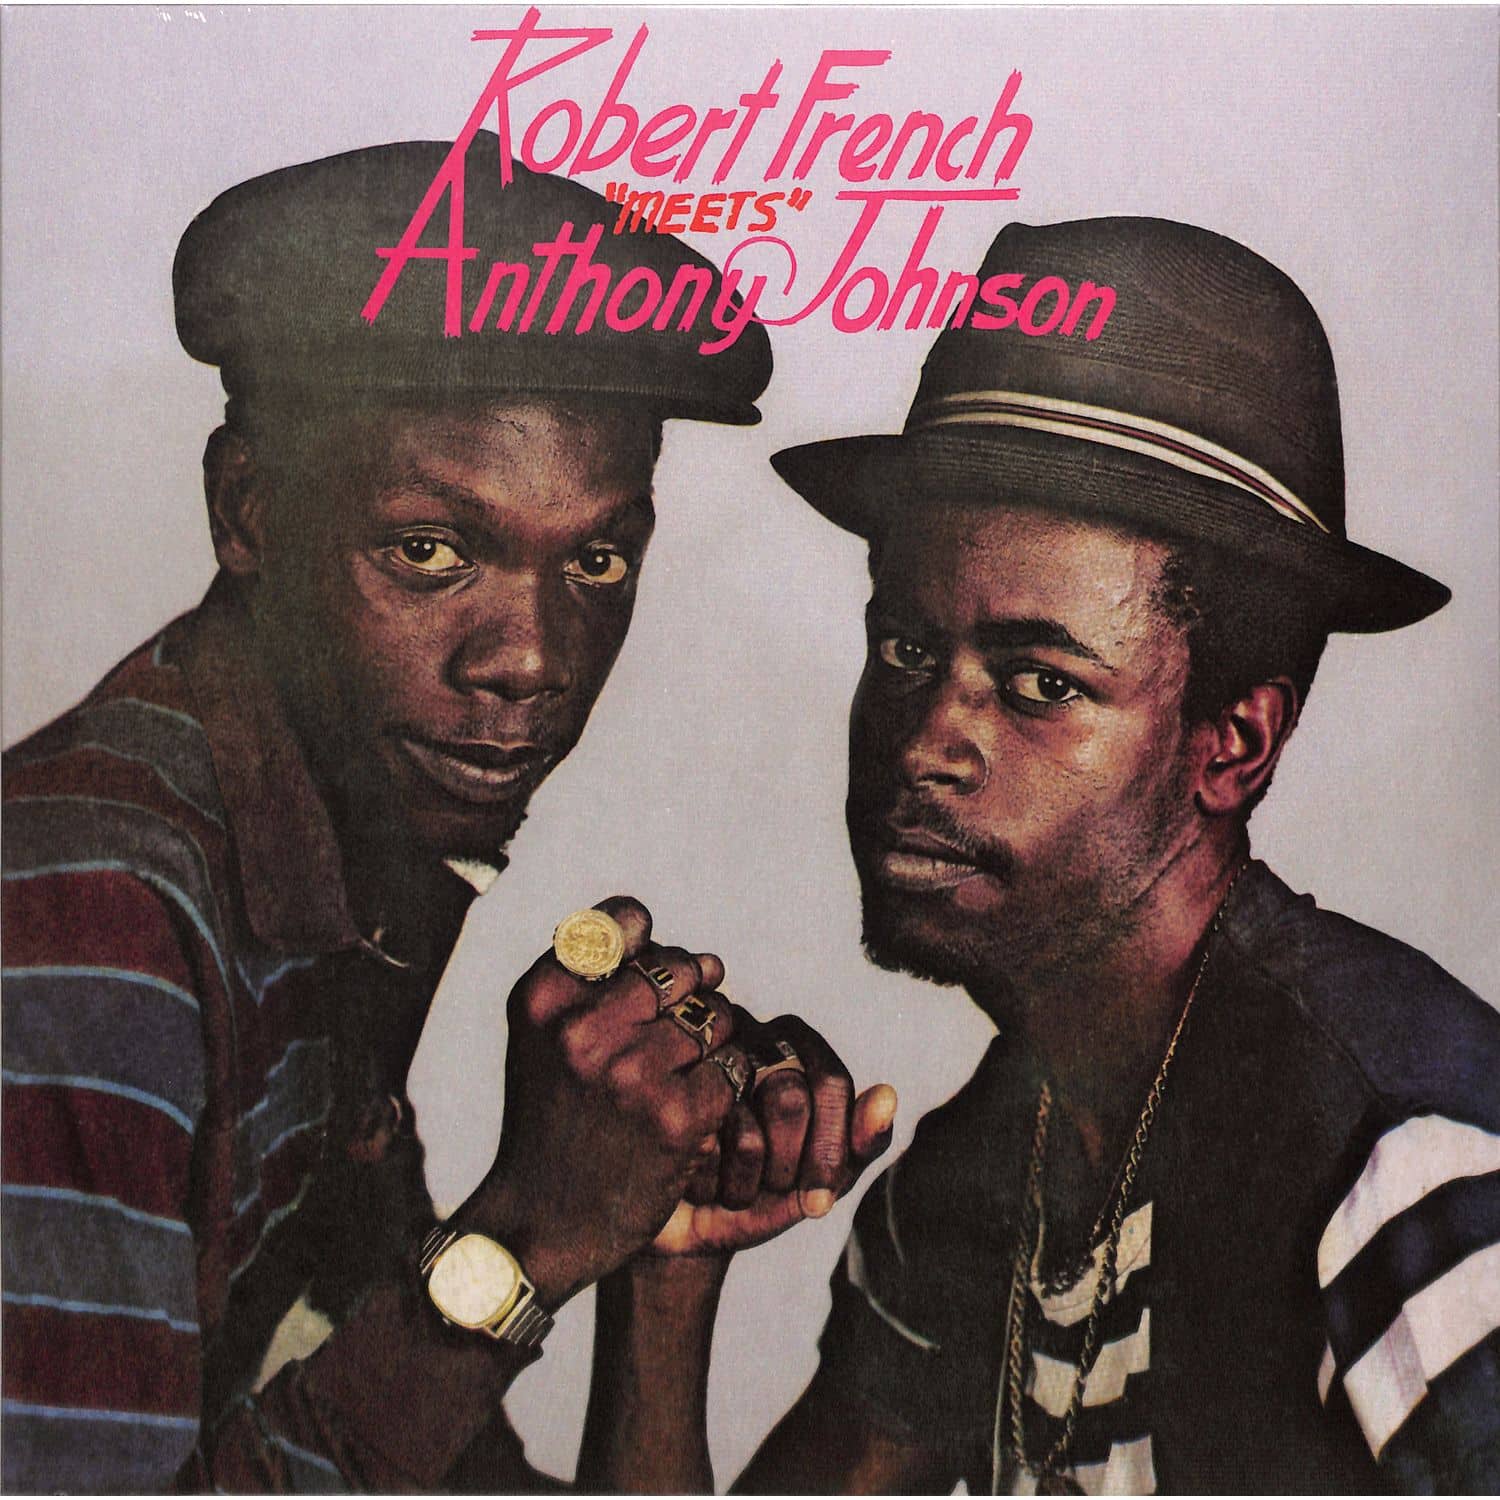 Robert French / Anthony Johnson - ROBERT FRENCH MEETS ANTHONY JOHNSON 